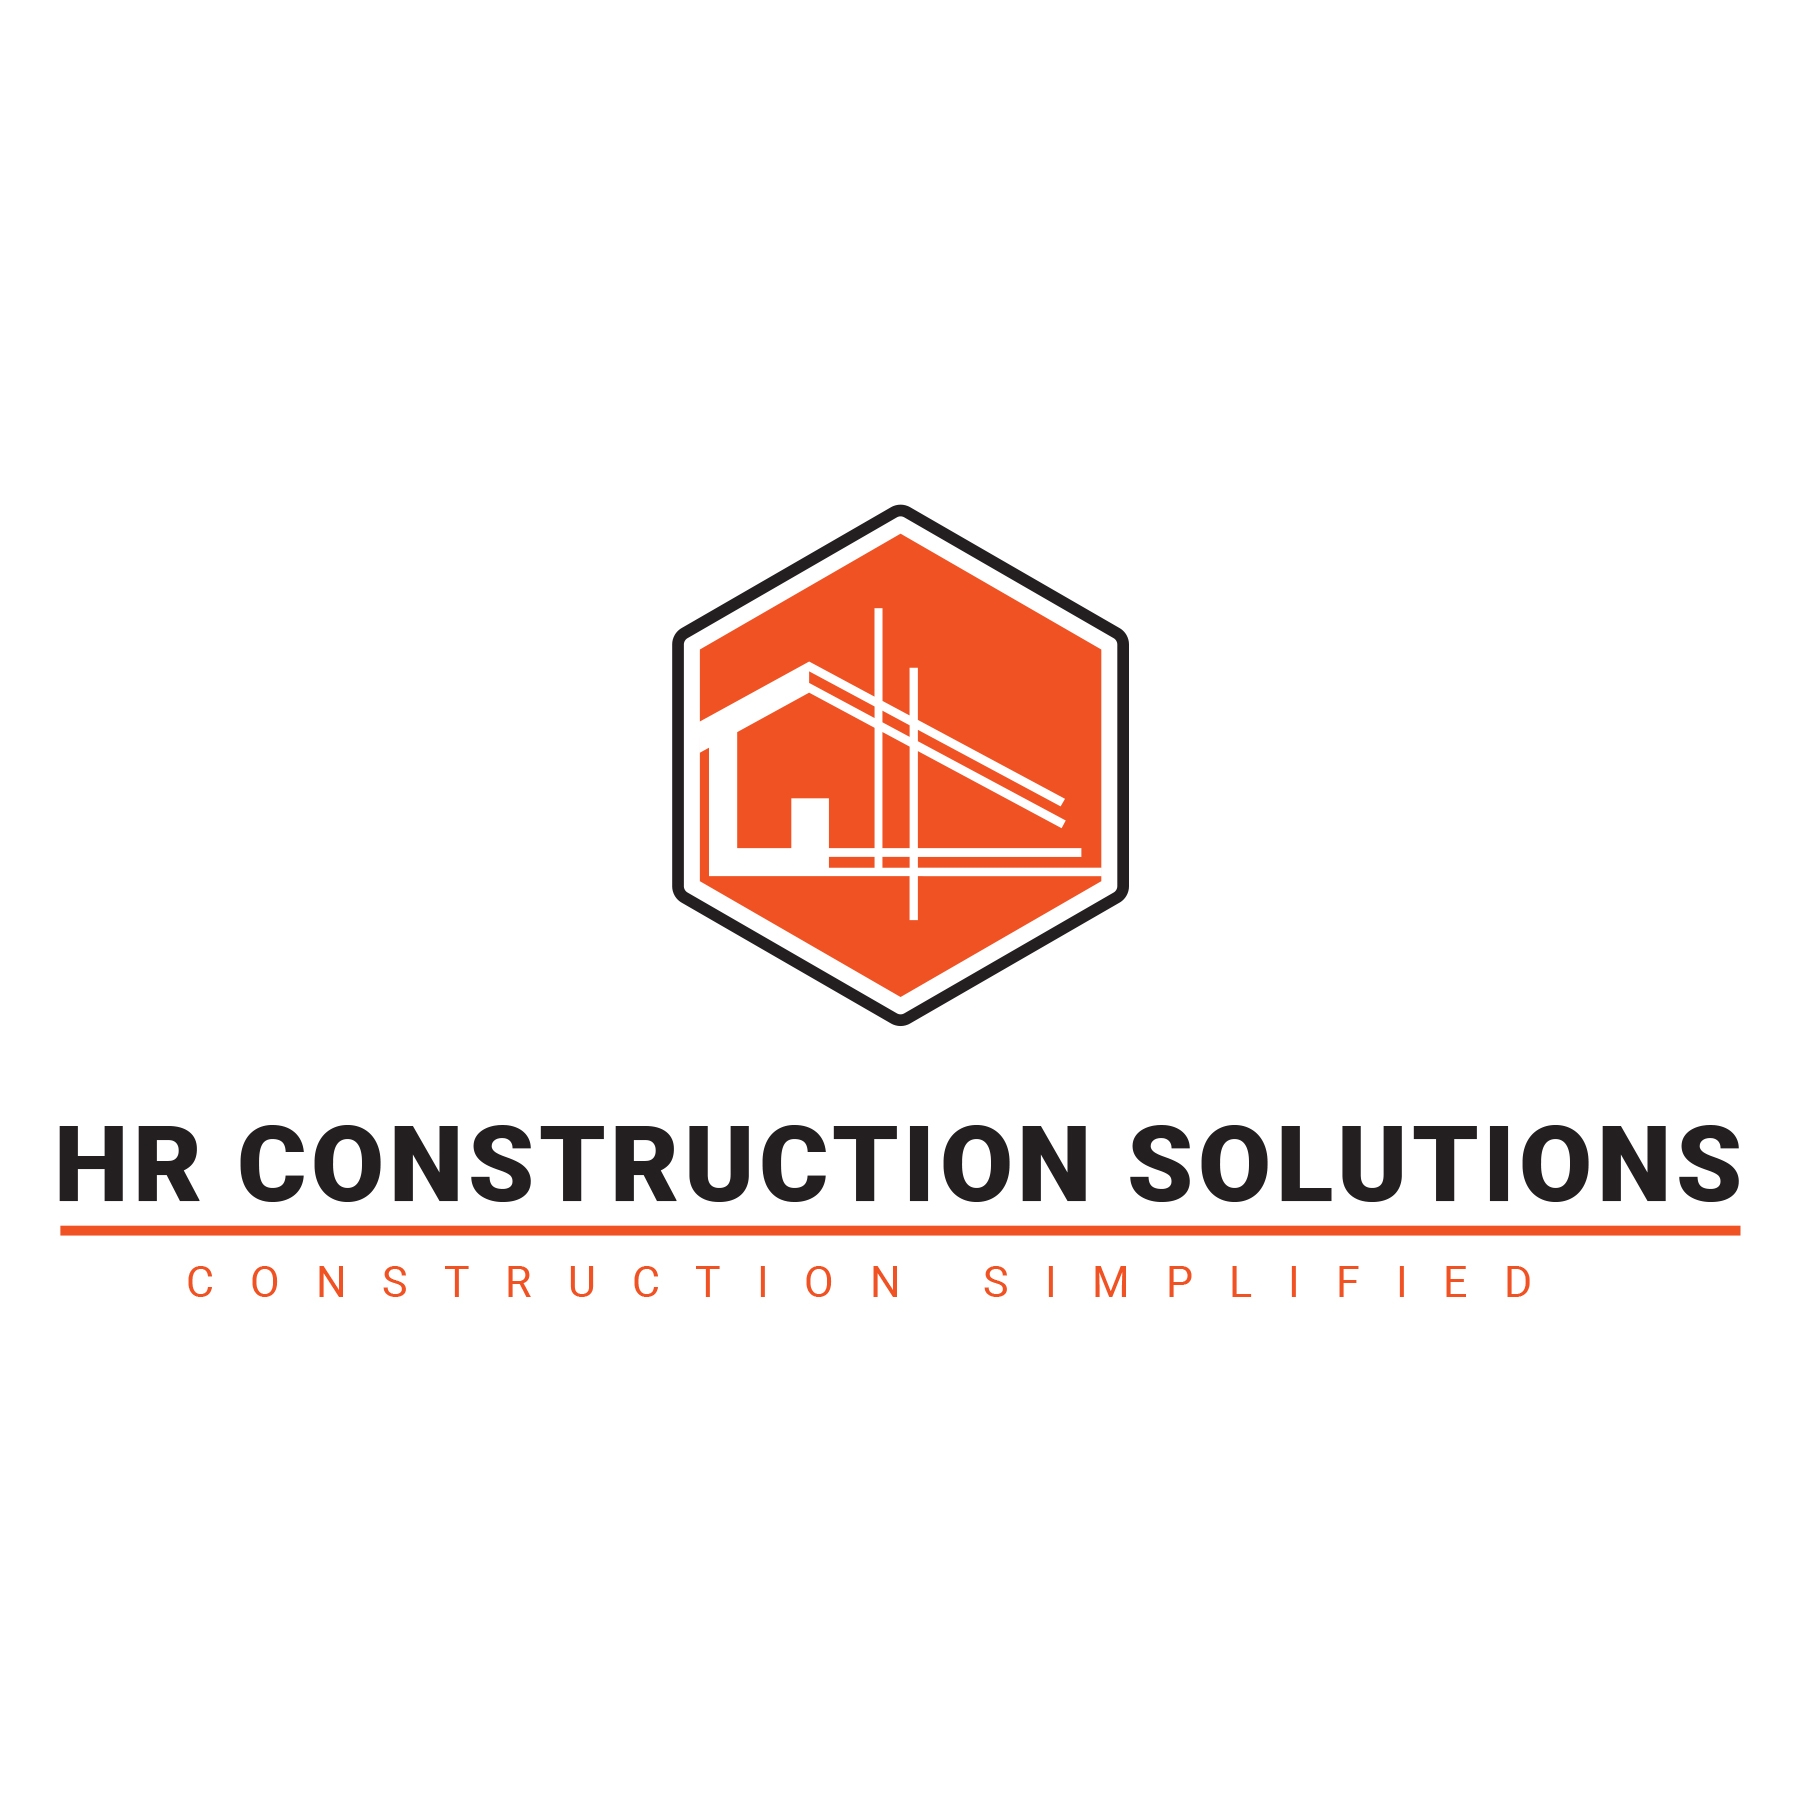 HR Construction Solutions|IT Services|Professional Services